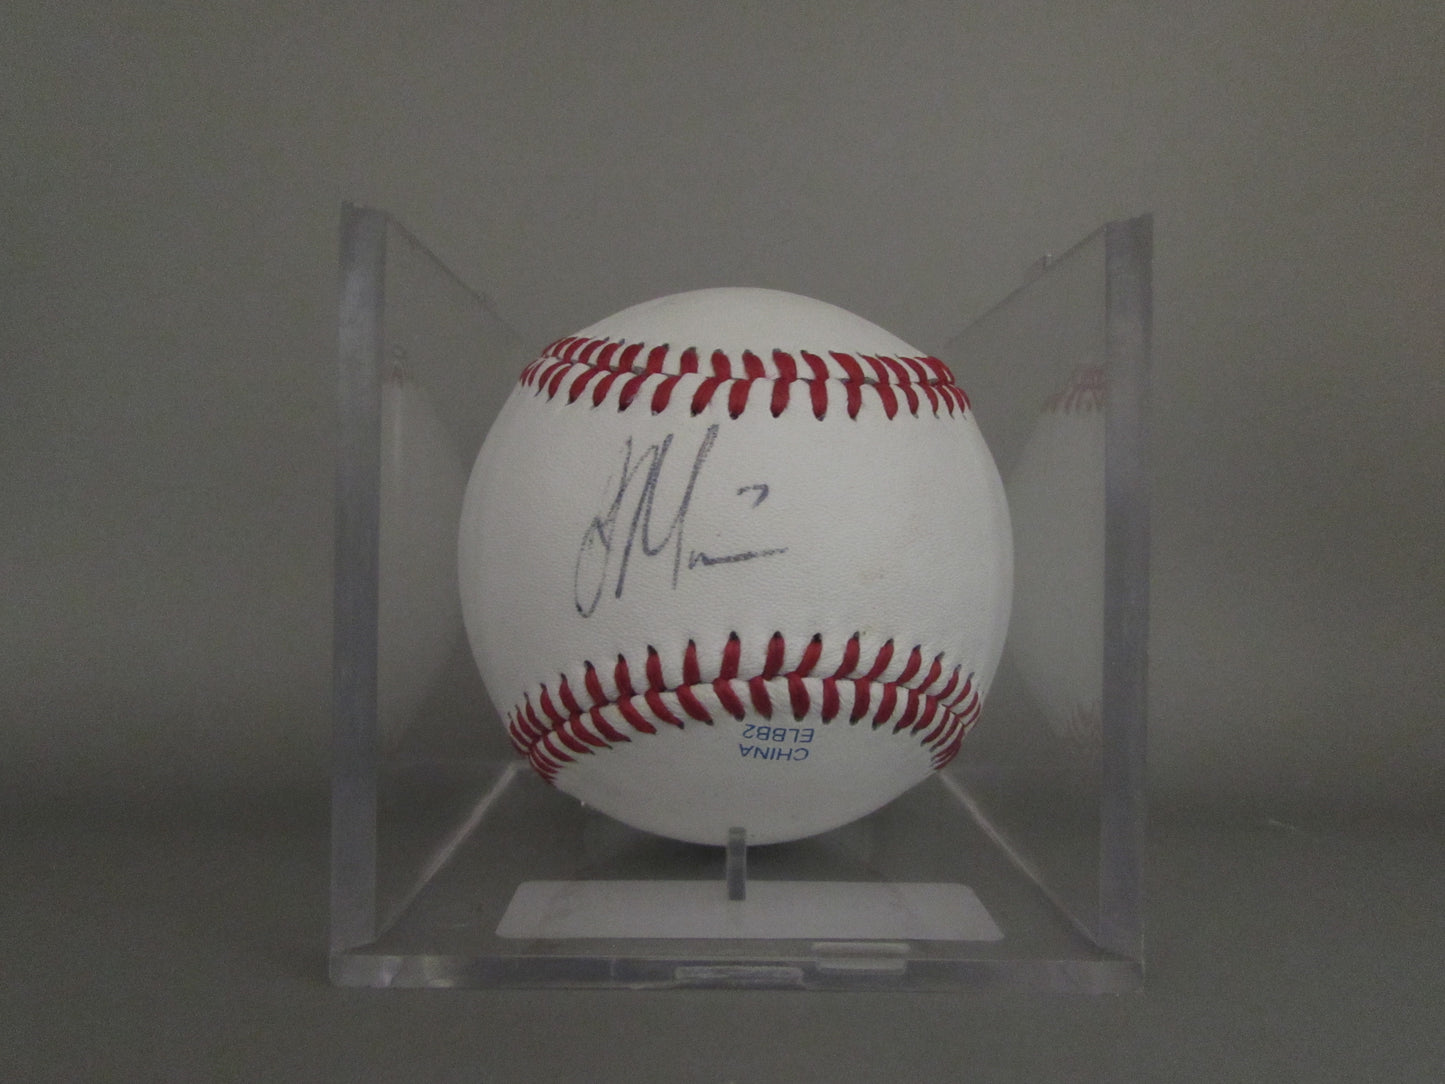 Joe Mauer signed baseball